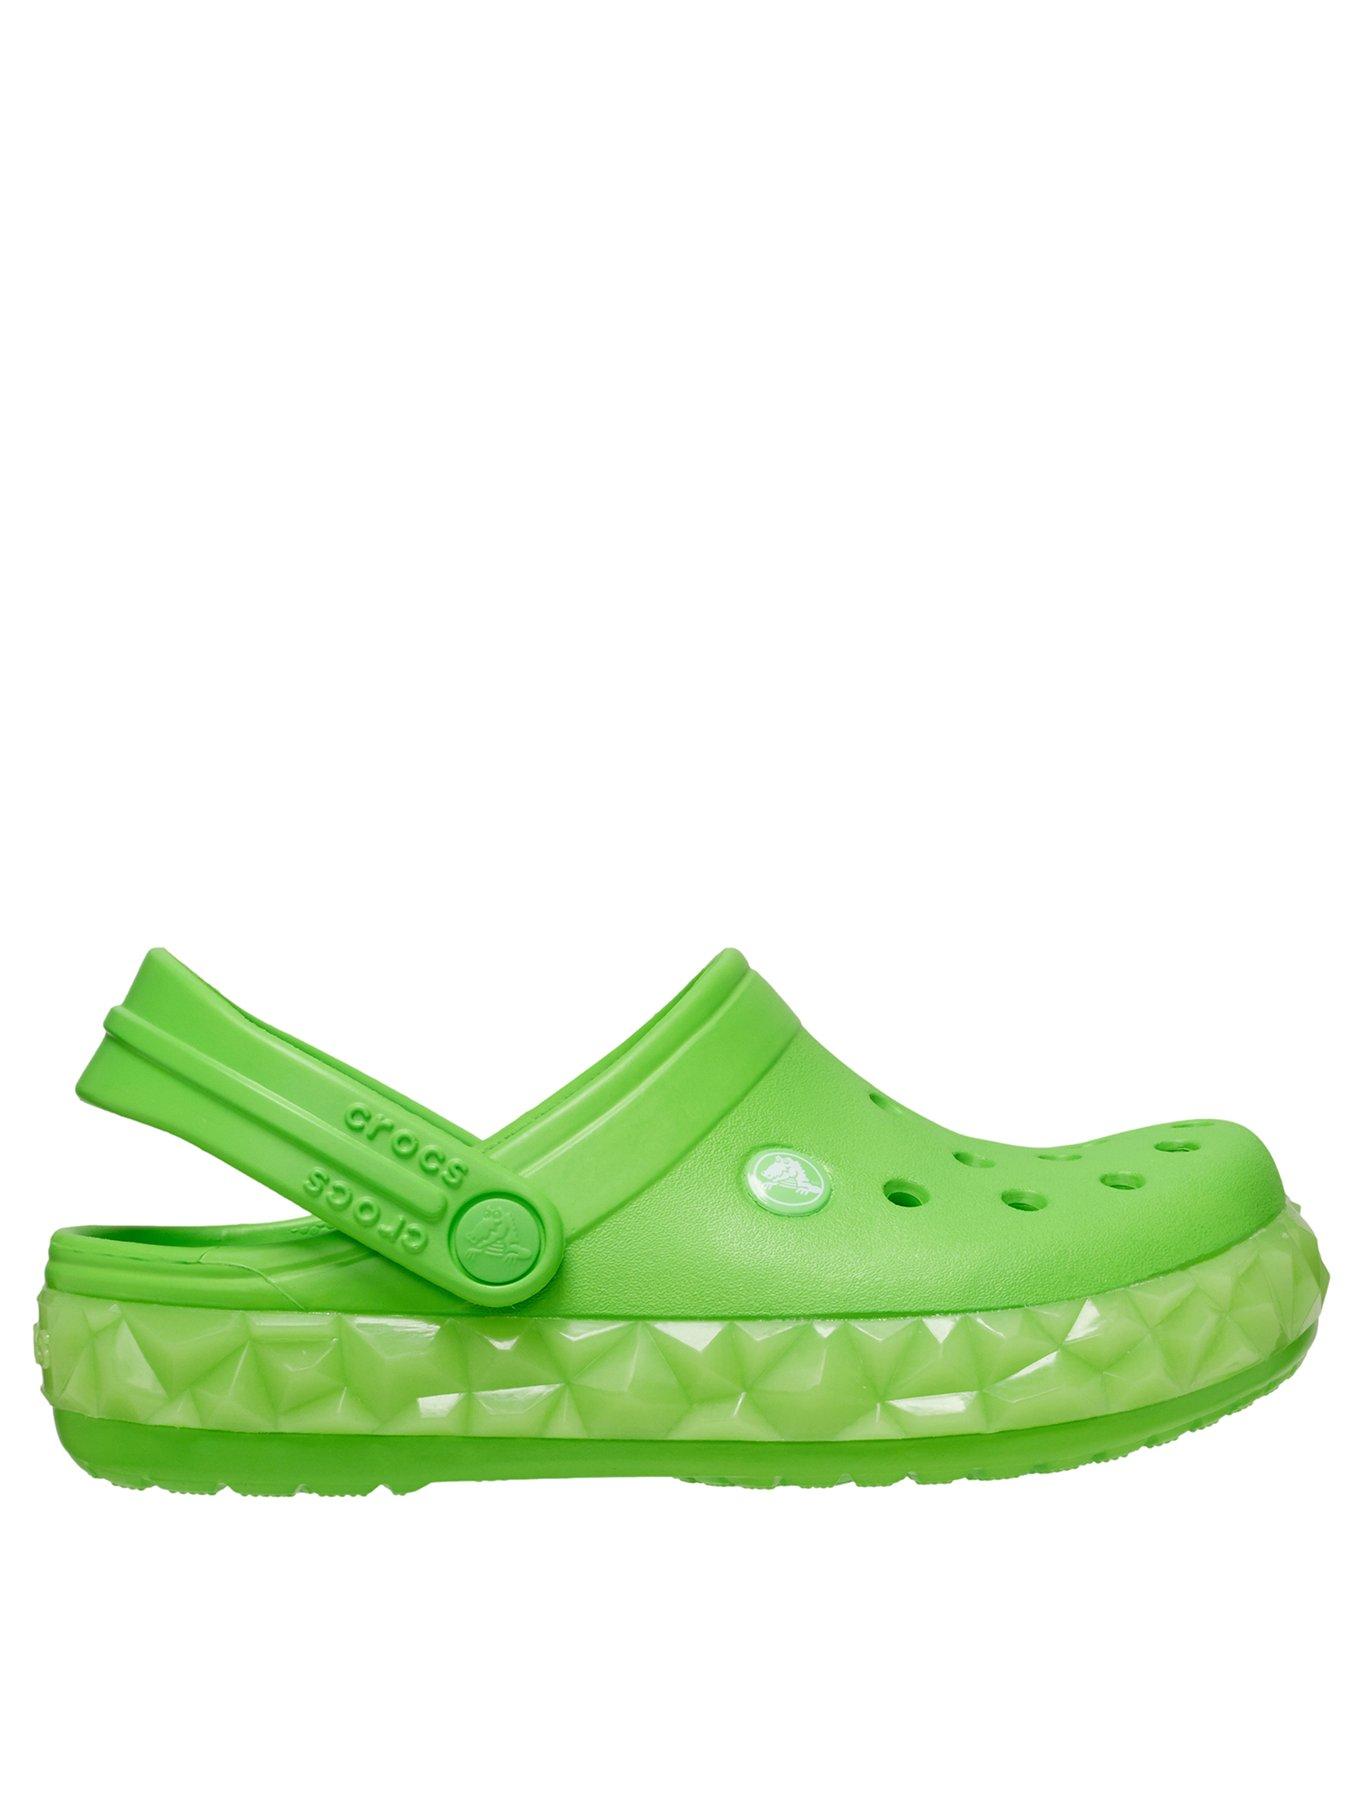 Crocs Crocband Geometric Glowband Clog K Sandal, Green, Size 12 Younger